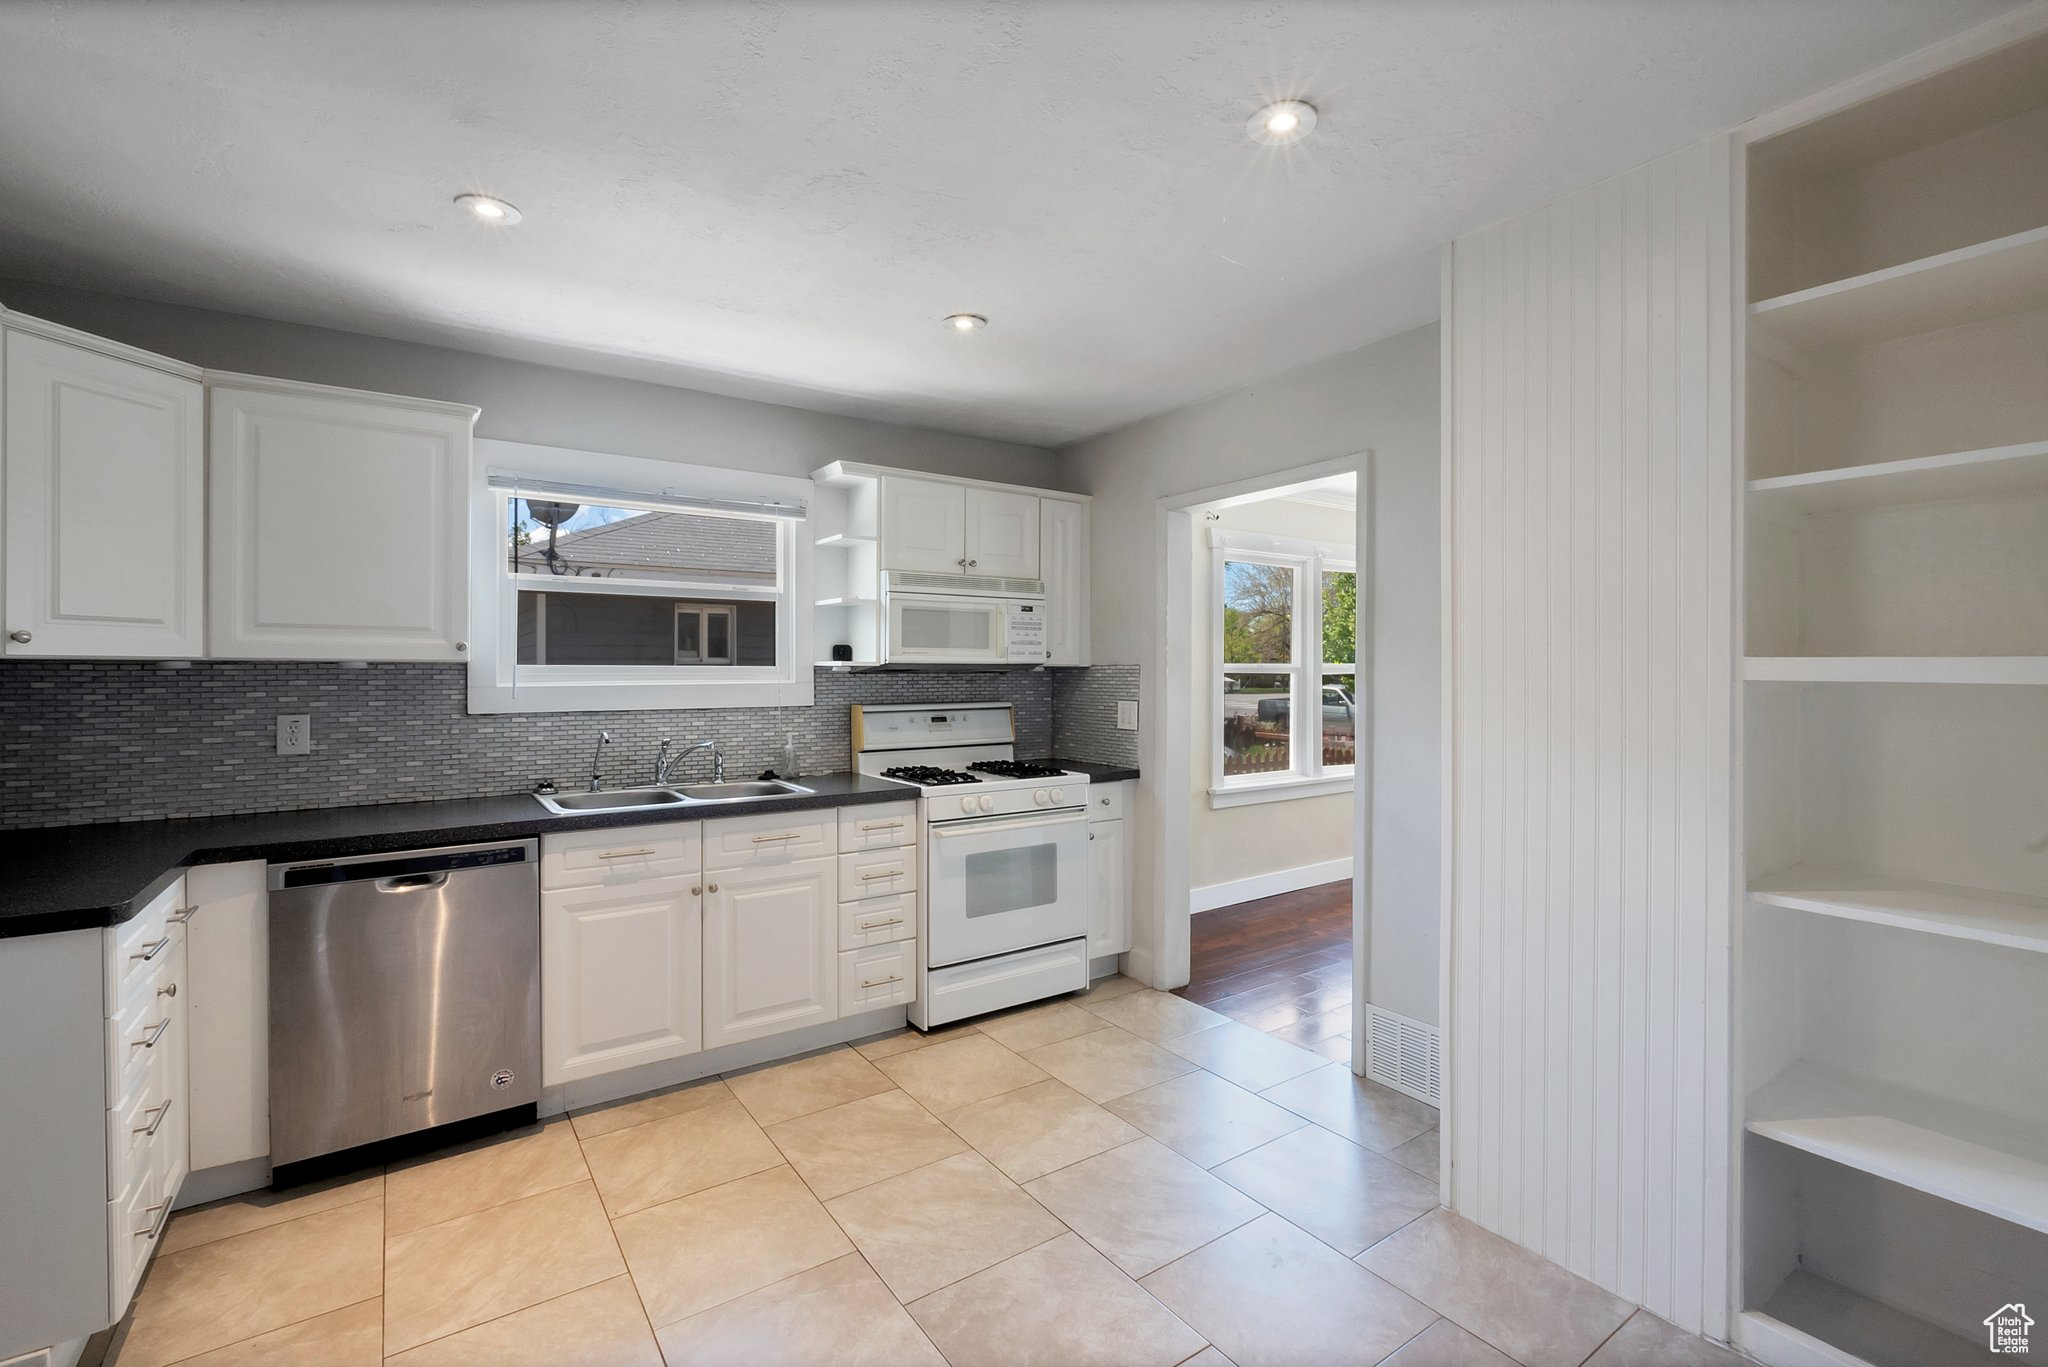 Kitchen with tasteful backsplash, white appliances, light tile flooring, sink, and white cabinets